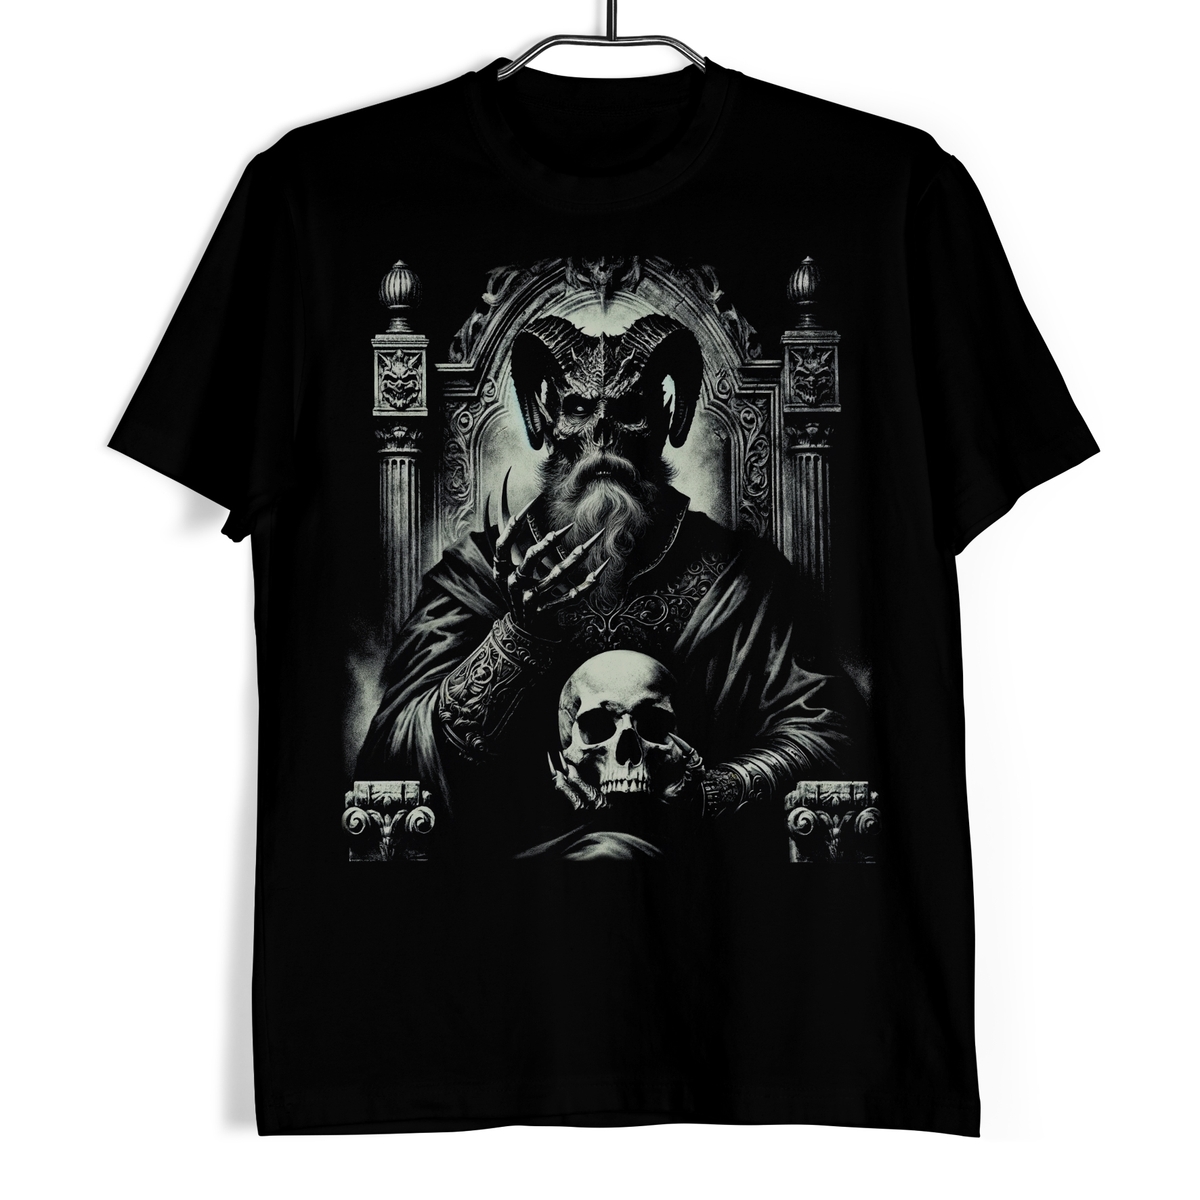 Tričko s lebkou - Vládce temného trůnu XXL